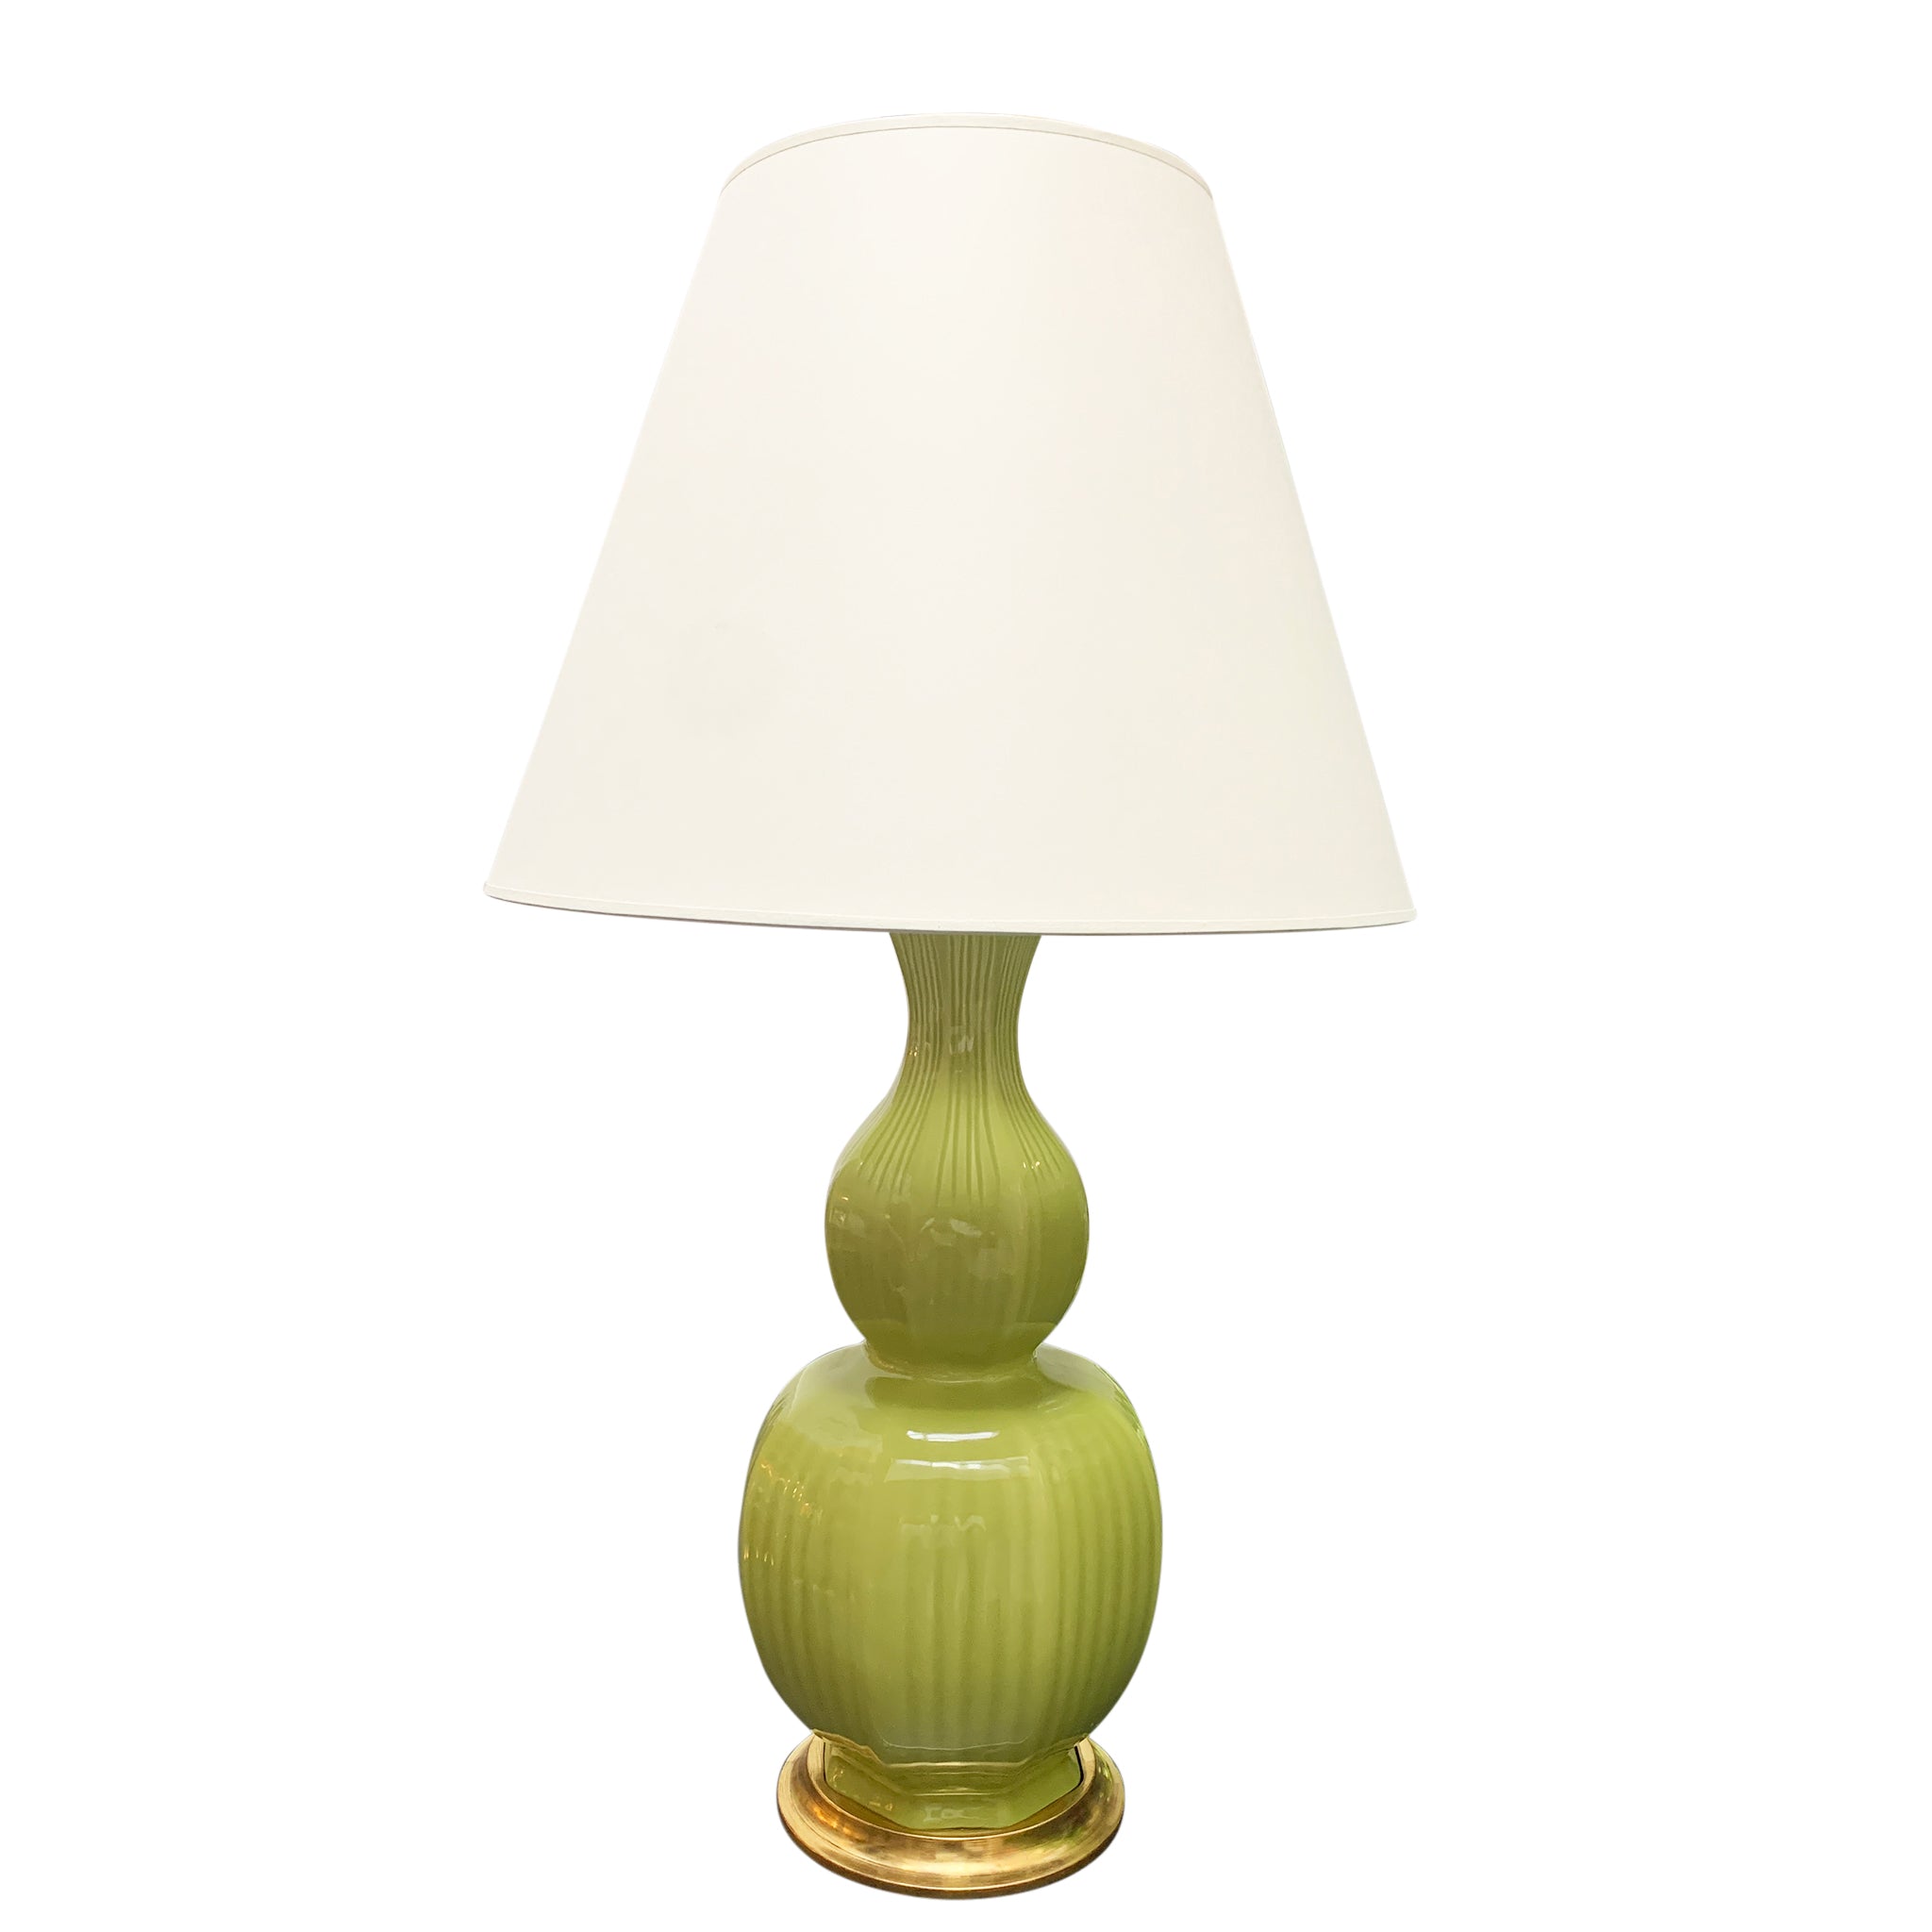 Delft Lamp in Apple Green